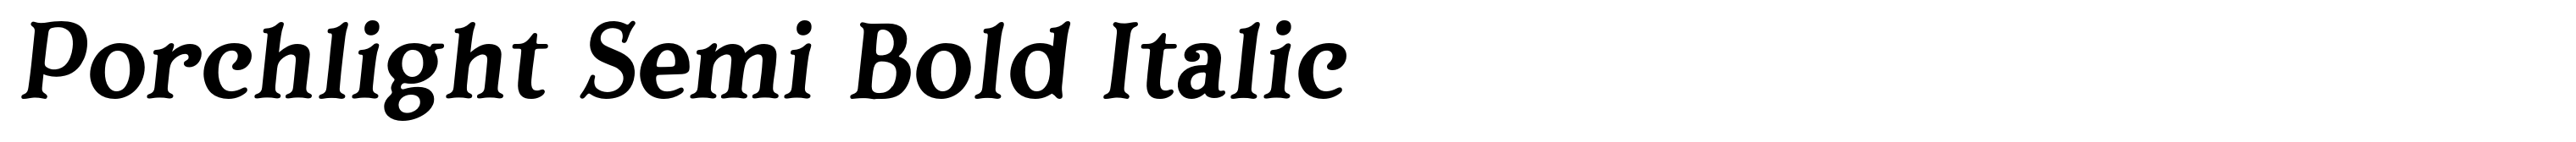 Porchlight Semi Bold Italic